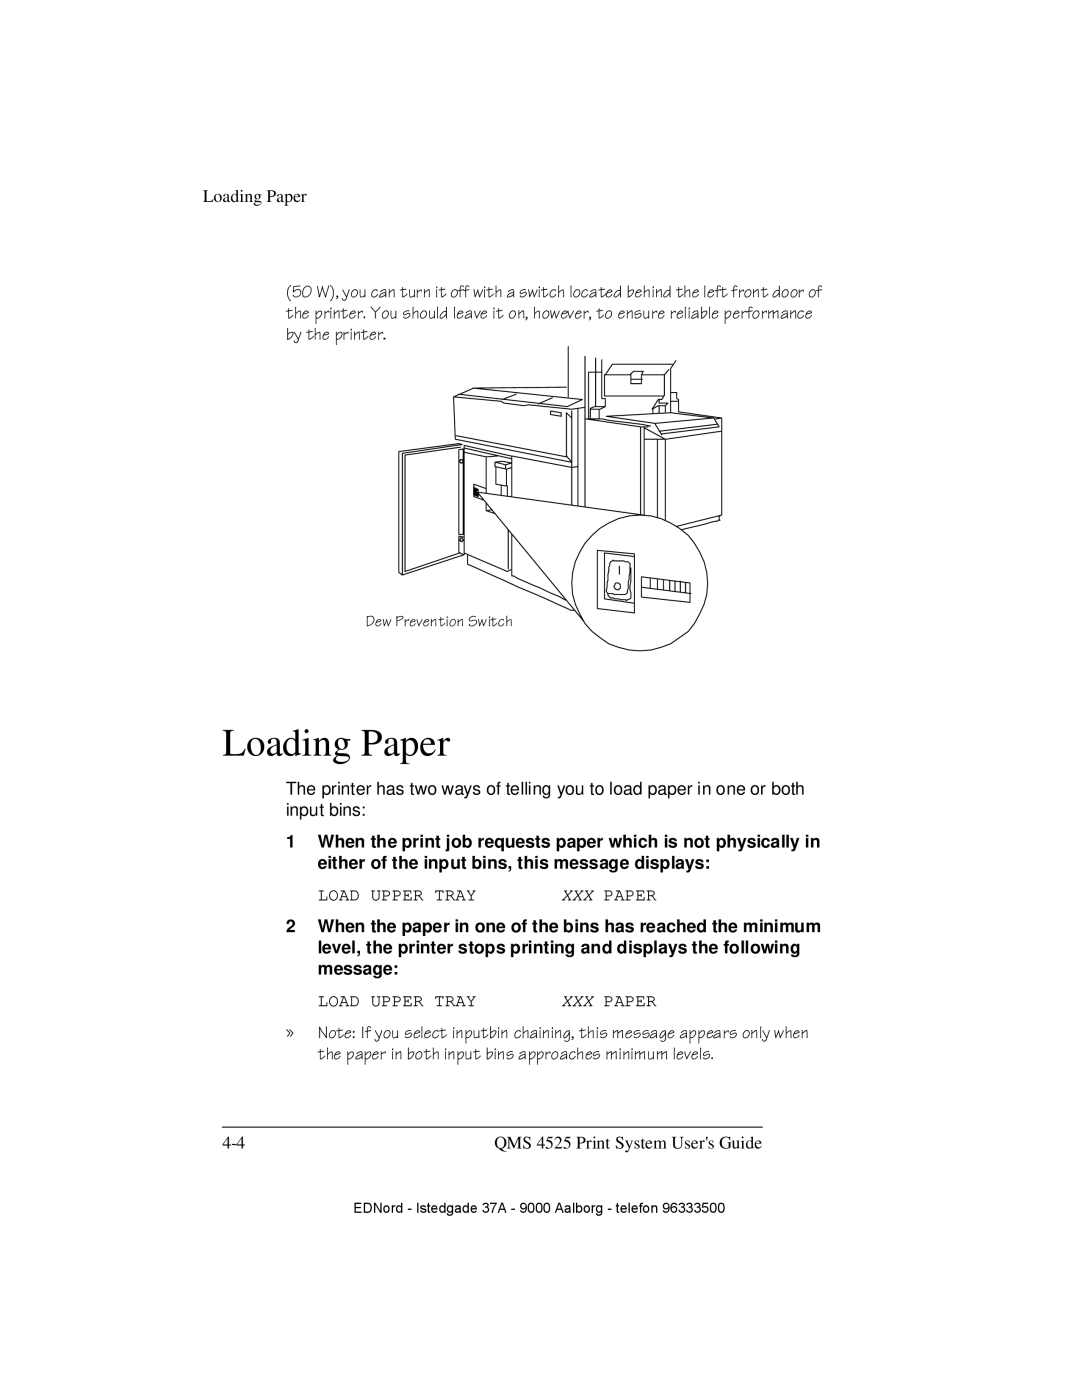 IBM QMS 4525 manual Loading Paper, HZ3UHYHQWLRQ6ZLWFK 